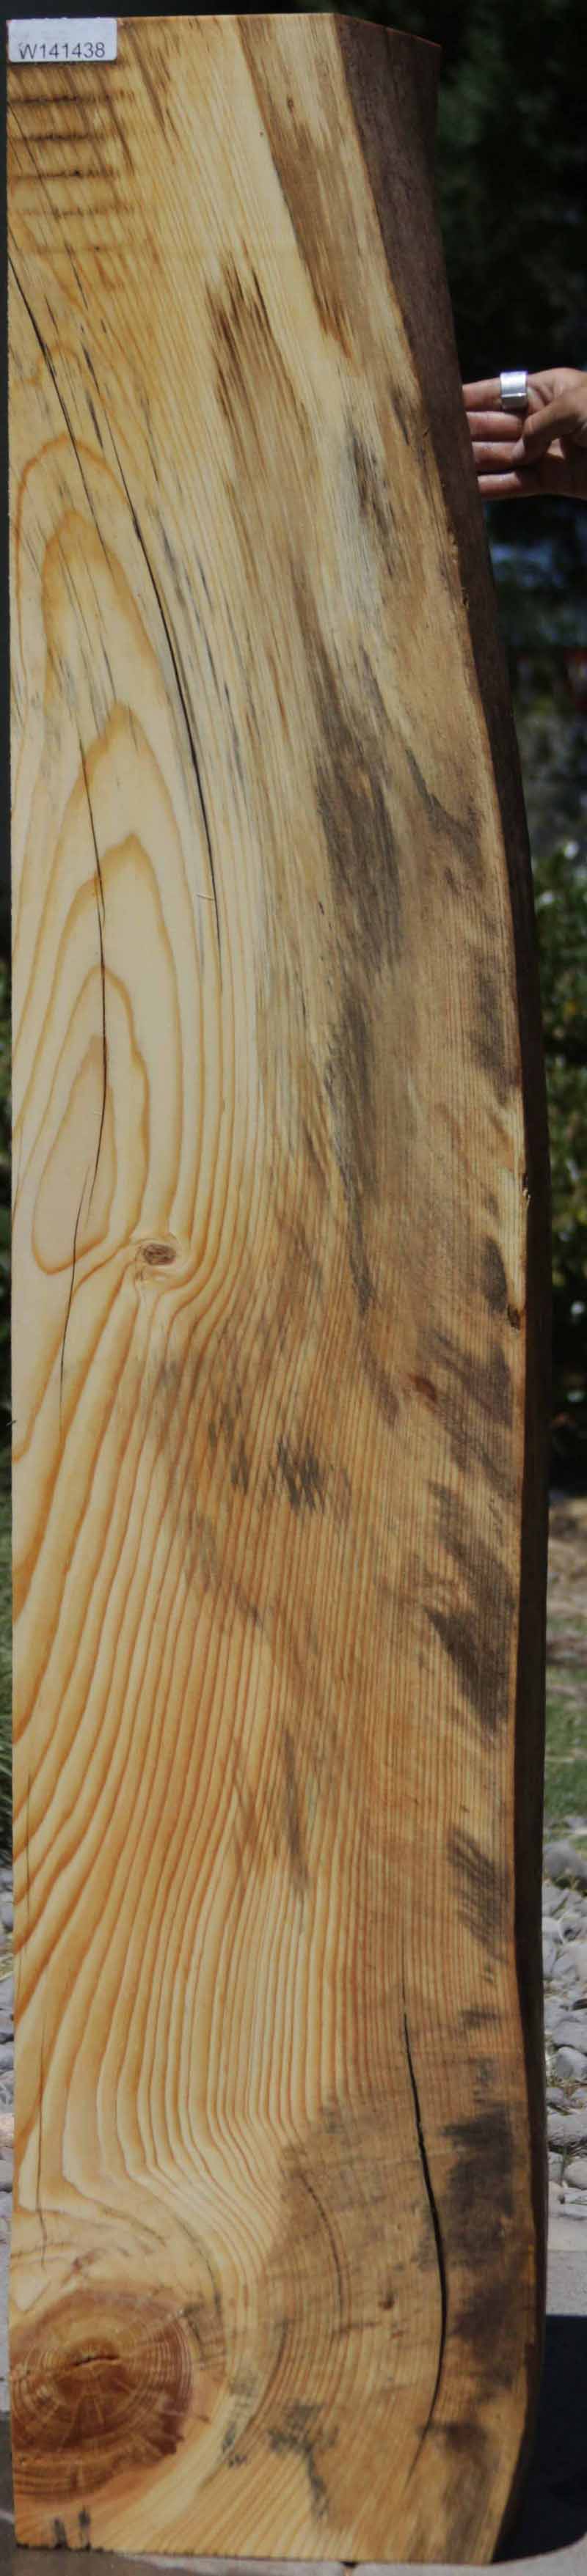 Rustic Blue Pine Mantel